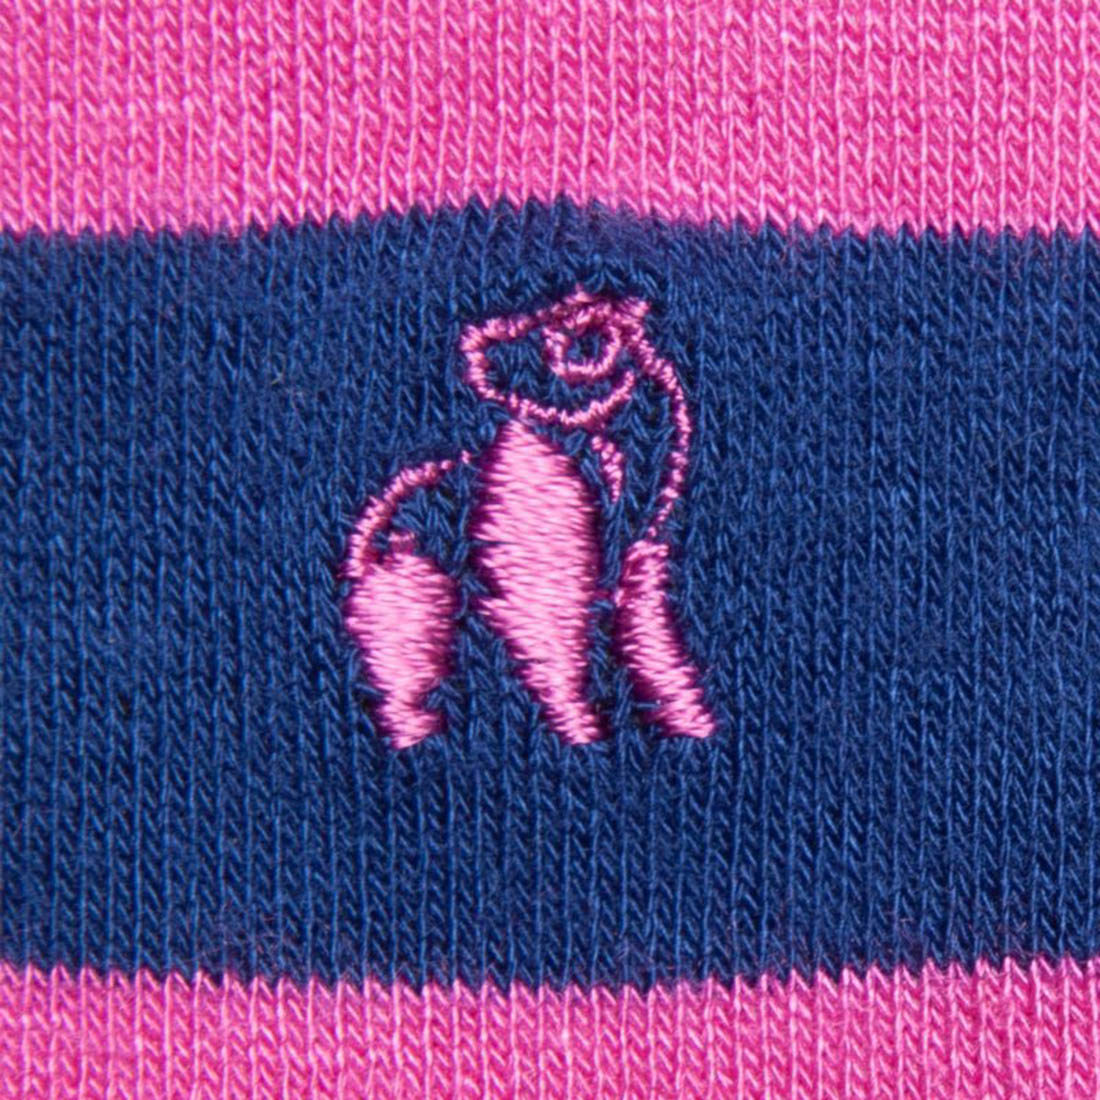 Rich Pink Striped Bamboo Socks (Comfort Cuff)